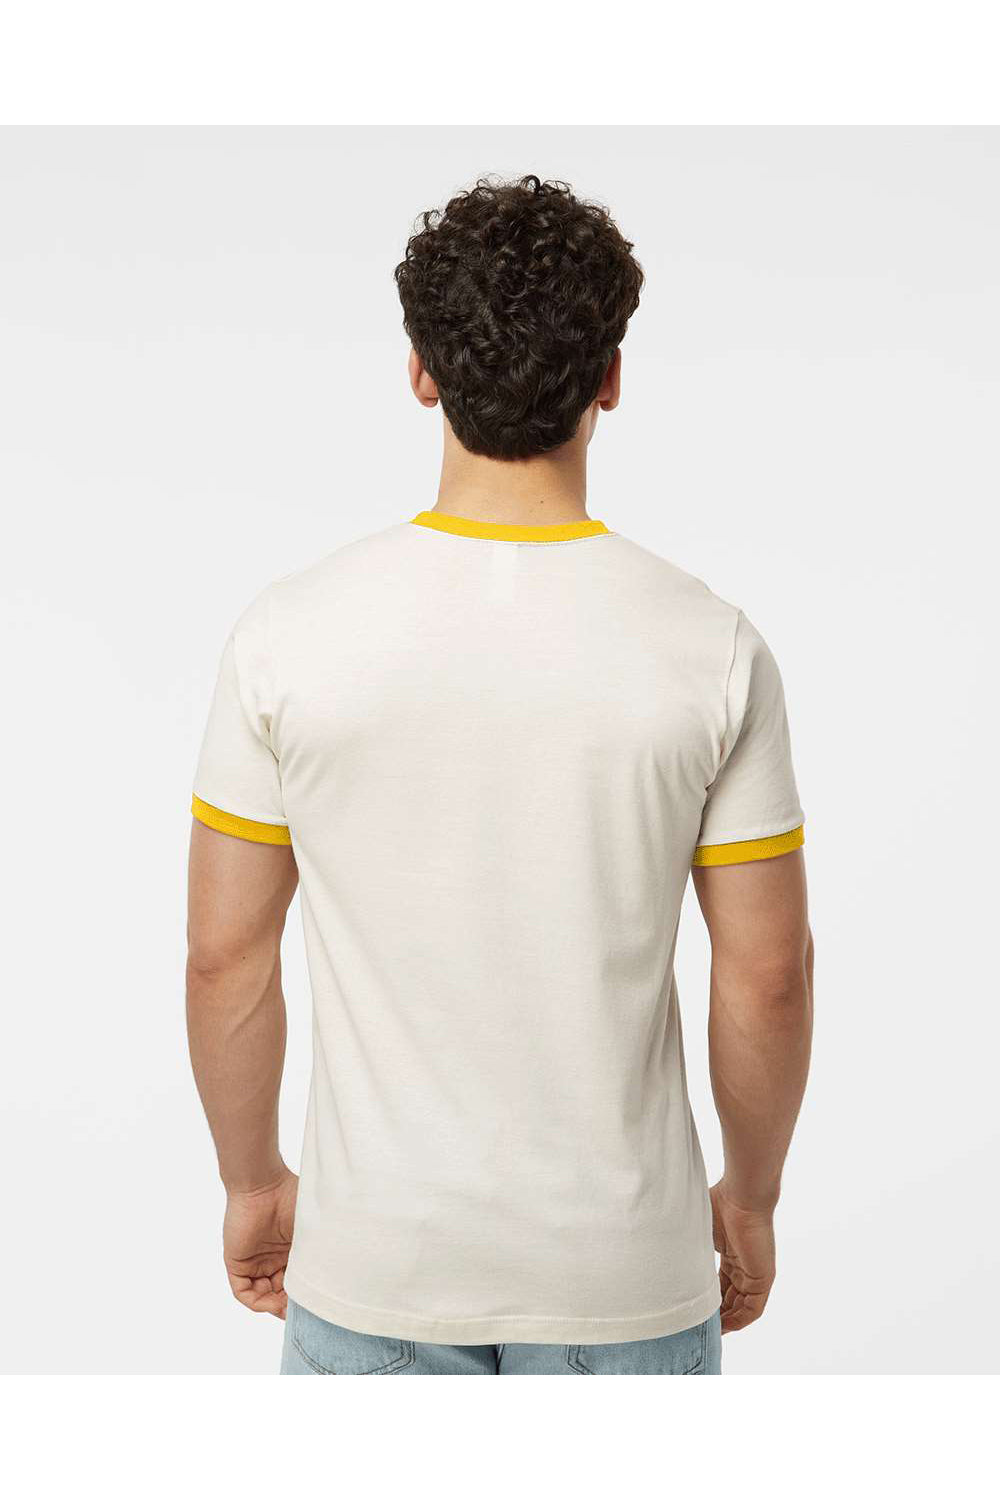 Tultex 246 Mens Fine Jersey Ringer Short Sleeve Crewneck T-Shirt Vintage White/Mellow Yellow Model Back